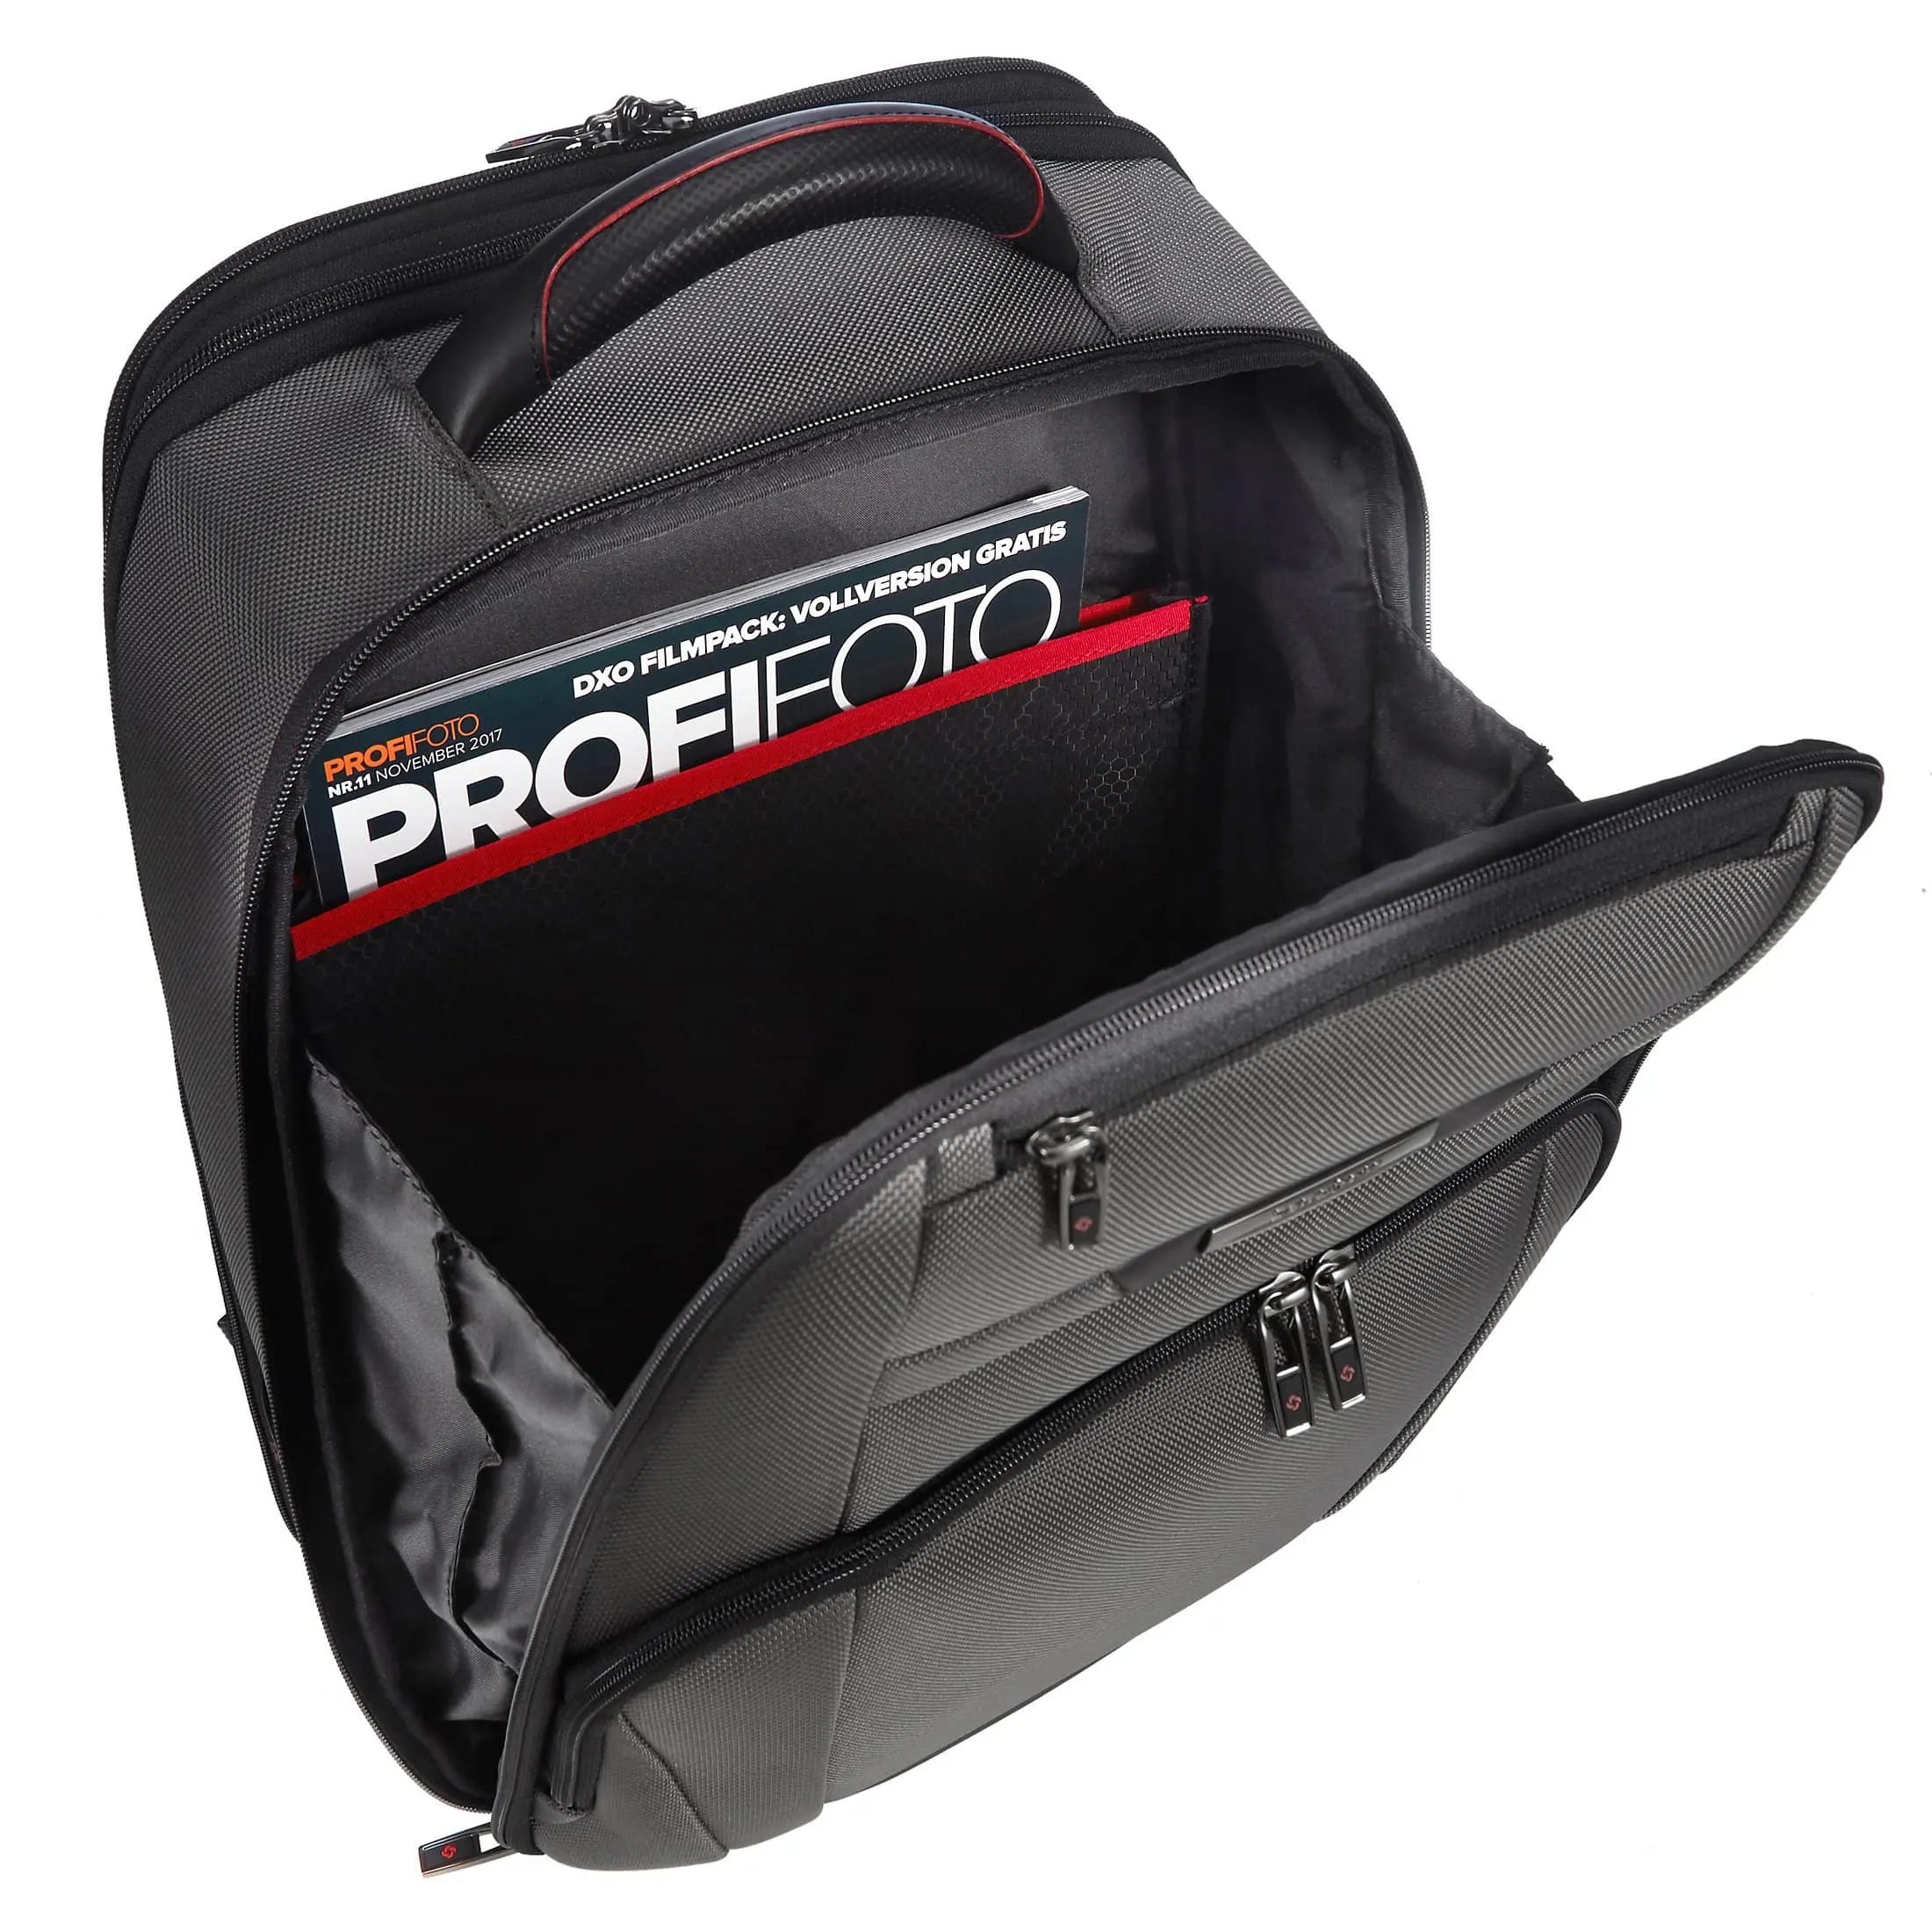 Samsonite Pro-DLX 5 Backpack 44 cm - black